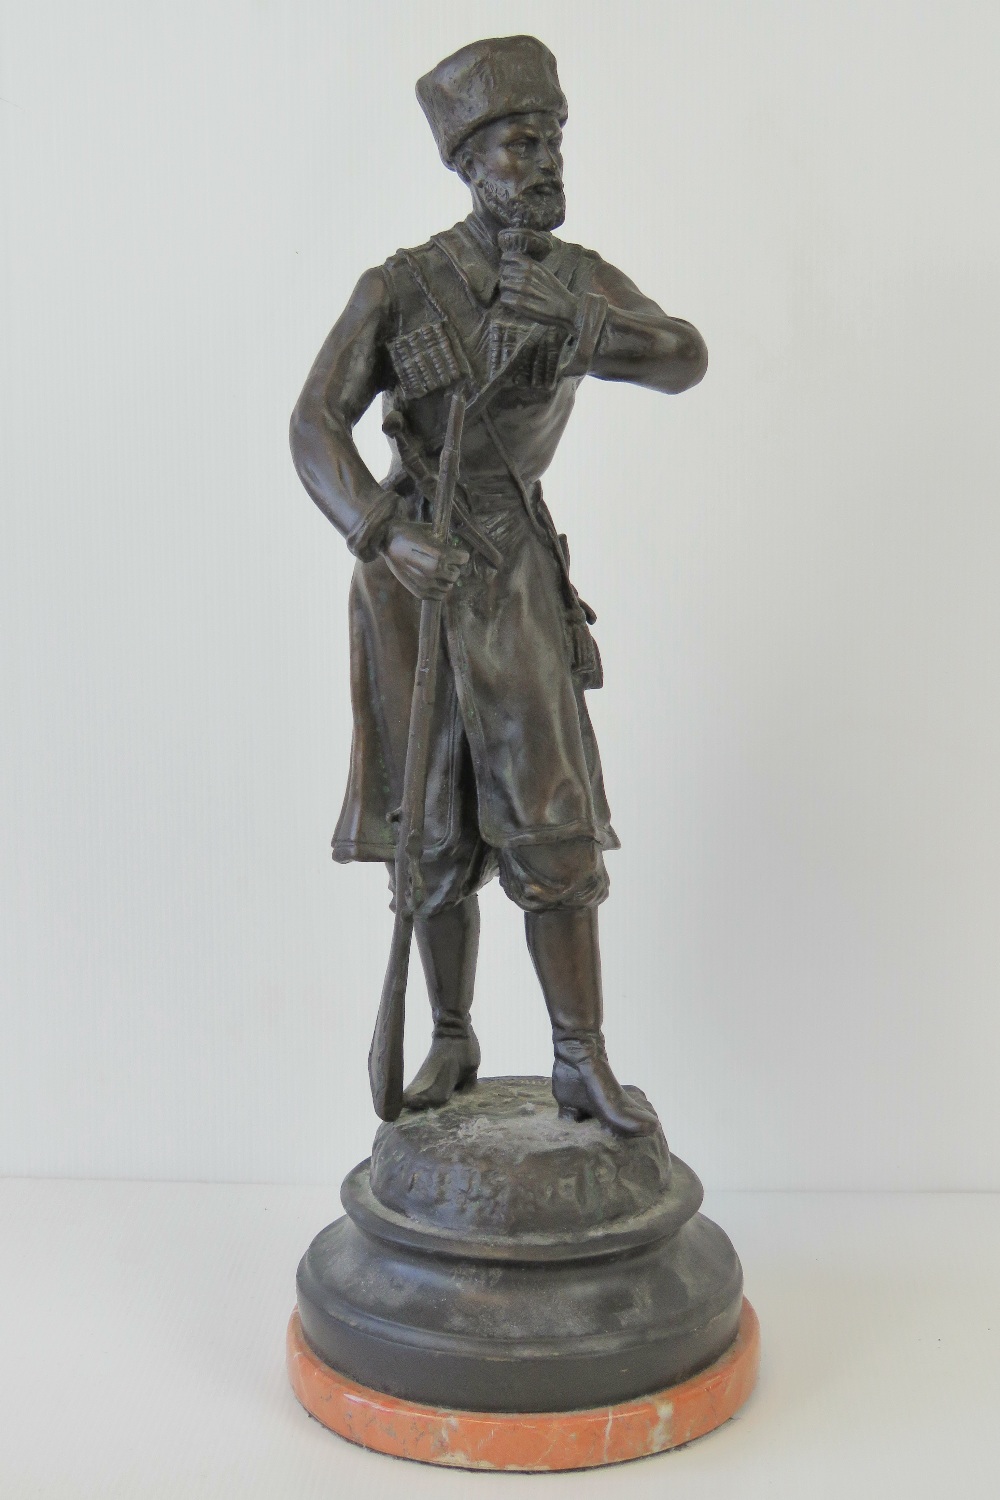 A 19thC bronze sculpture of a Cossack so